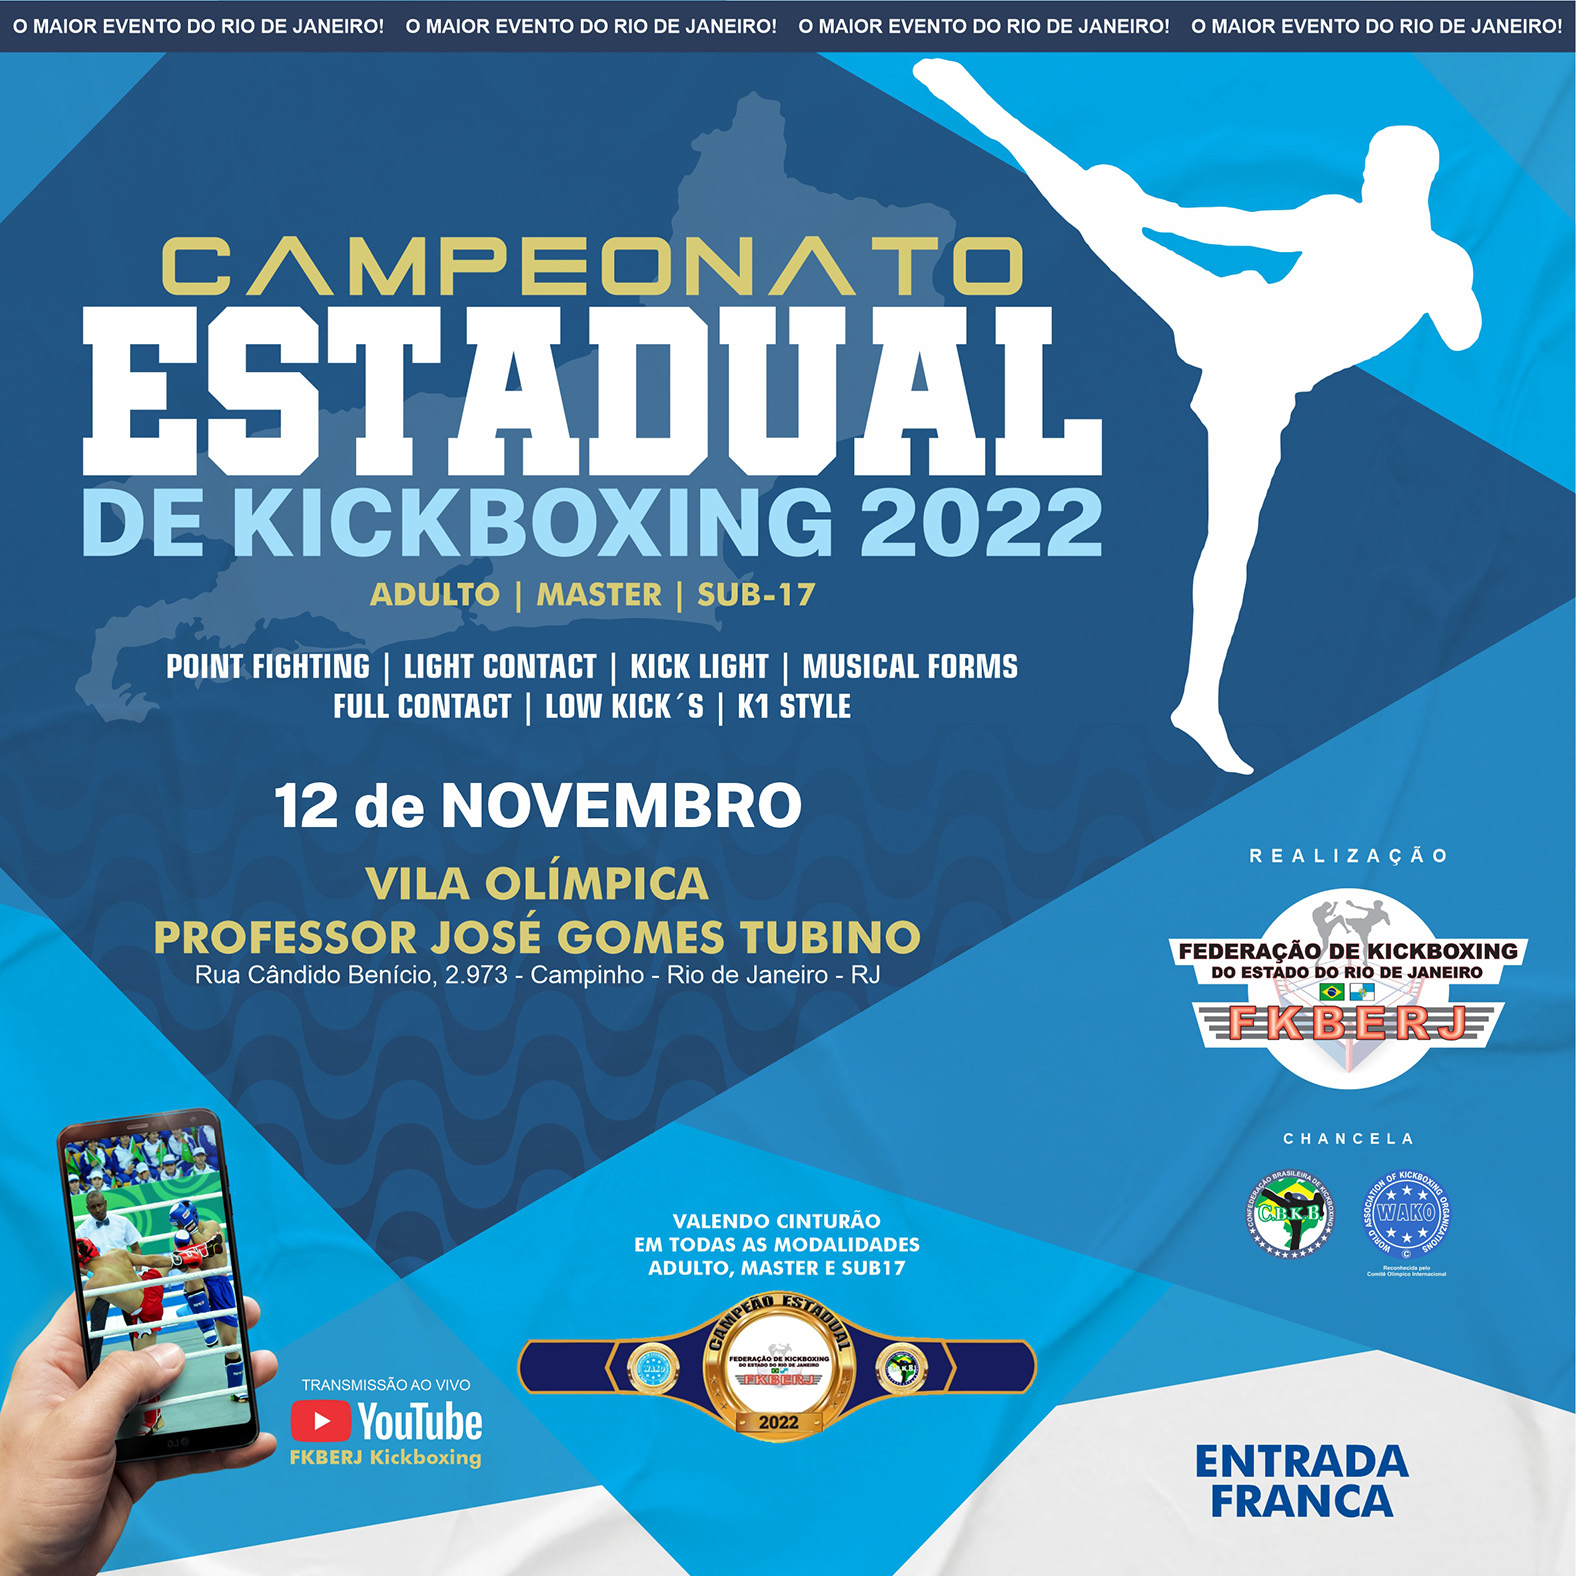 Campeonato Estadual de Kickboxing 2022